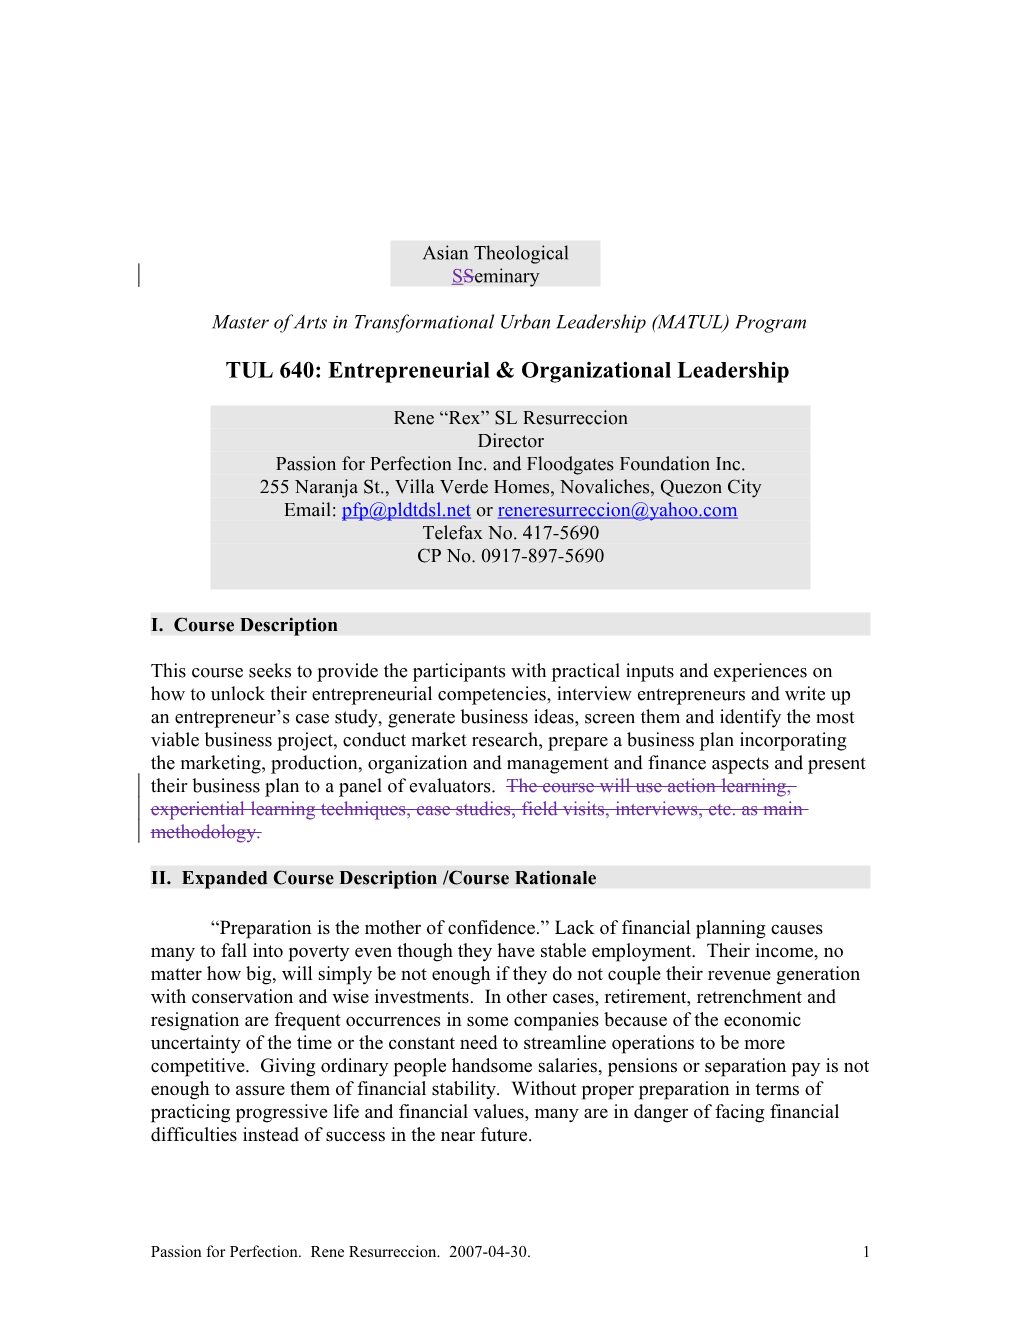 TUL 640: Entrepreneurial & Organizational Leadership